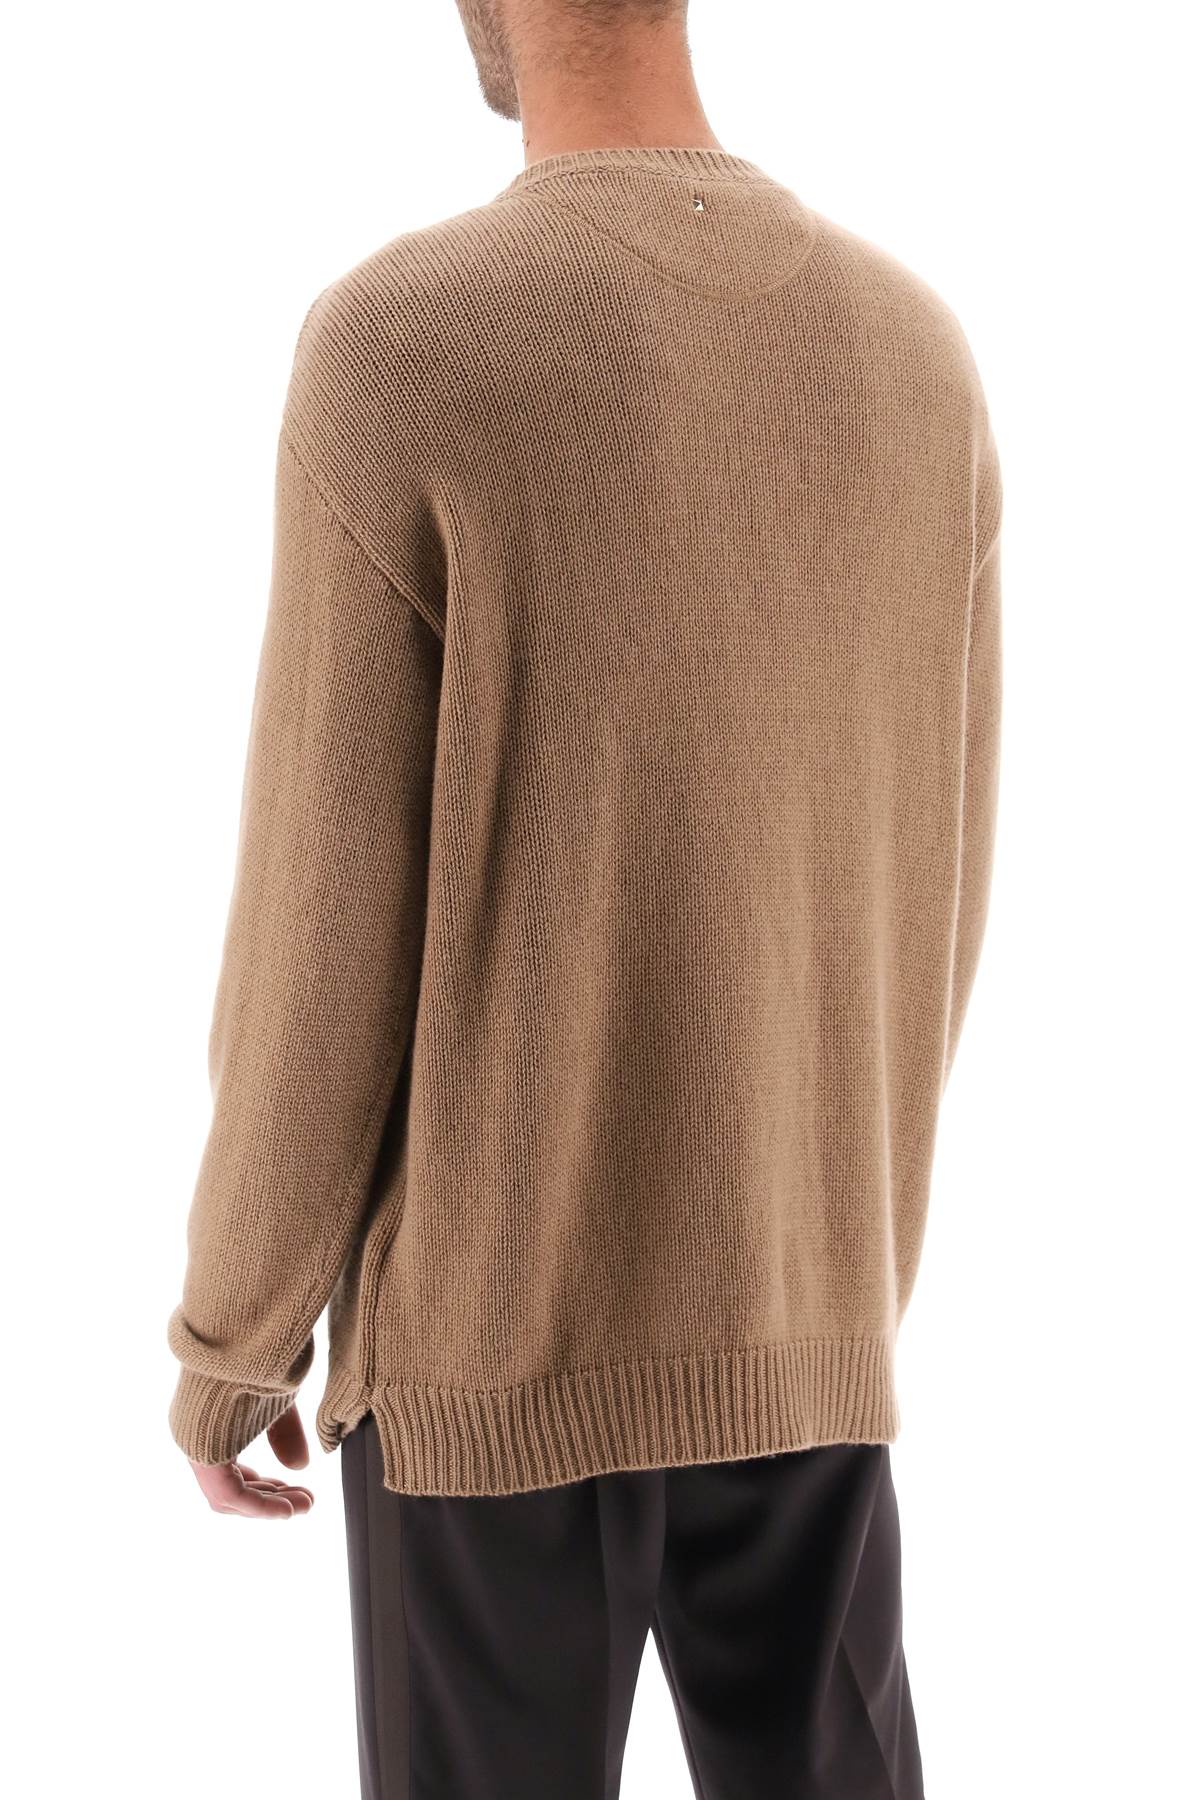 VALENTINO GARAVANI Men's Cashmere Sweater with Stud Embellishment in Beige